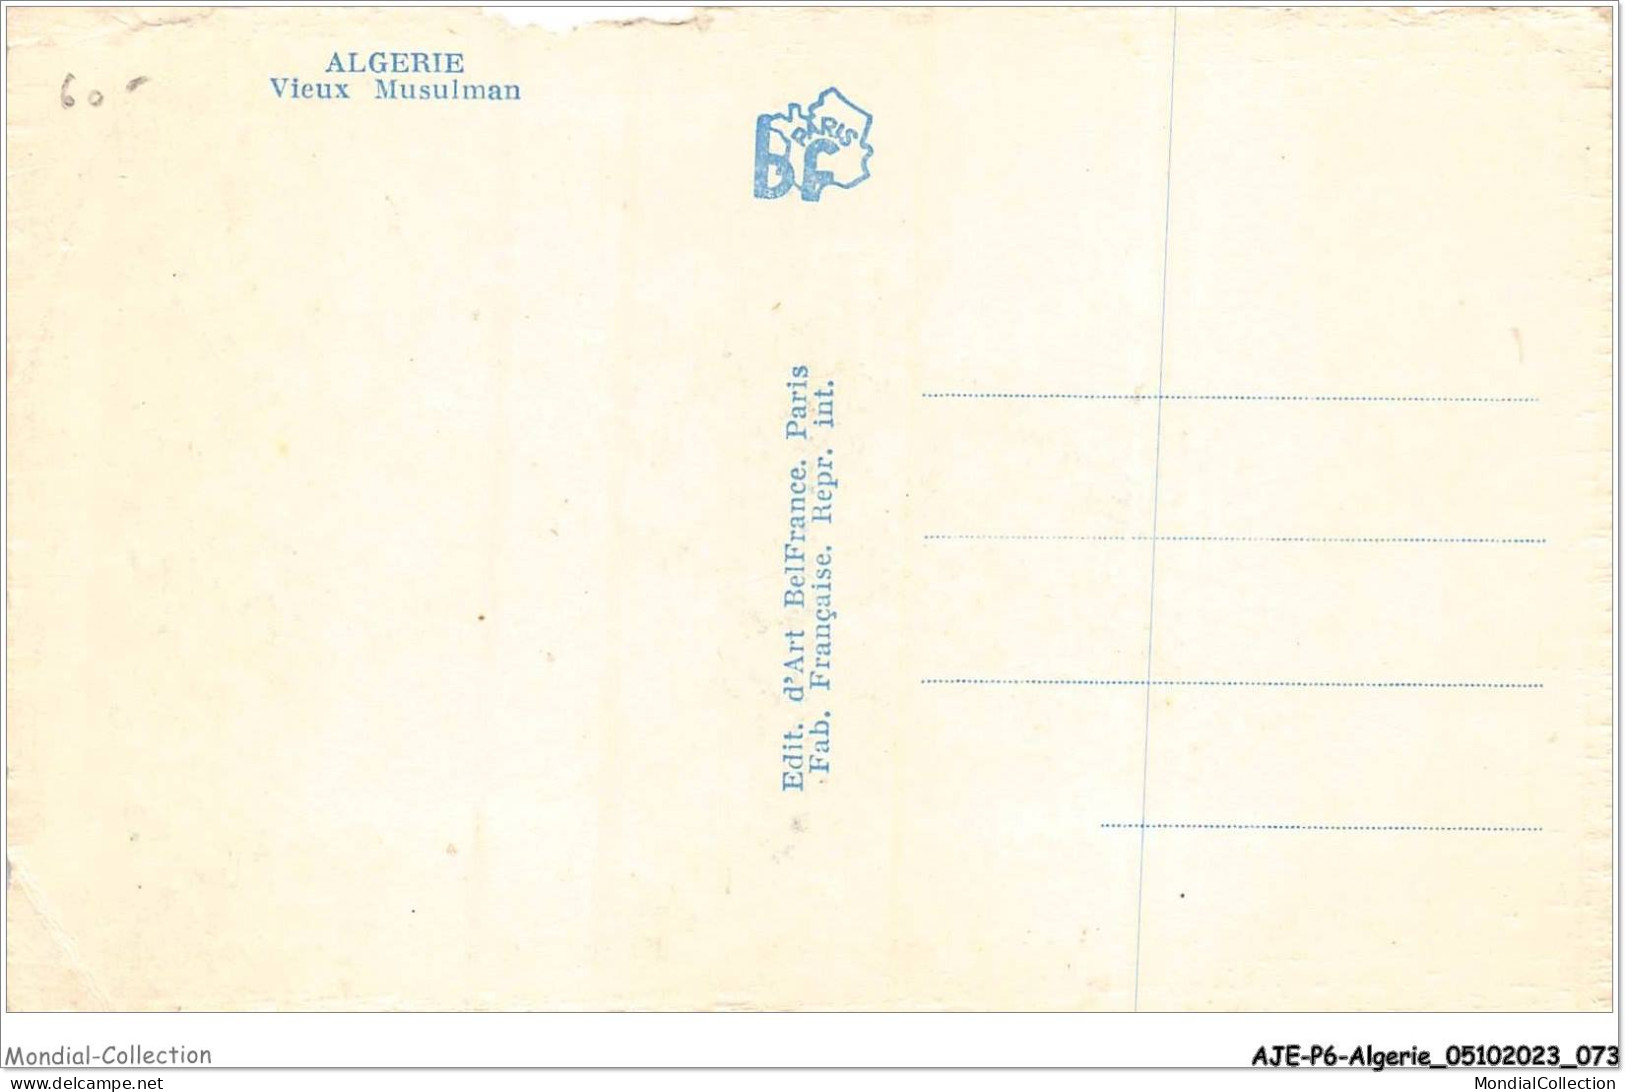 AJEP6-ALGERIE-0543 - ALGERIE - Vieux Musulman - Uomini